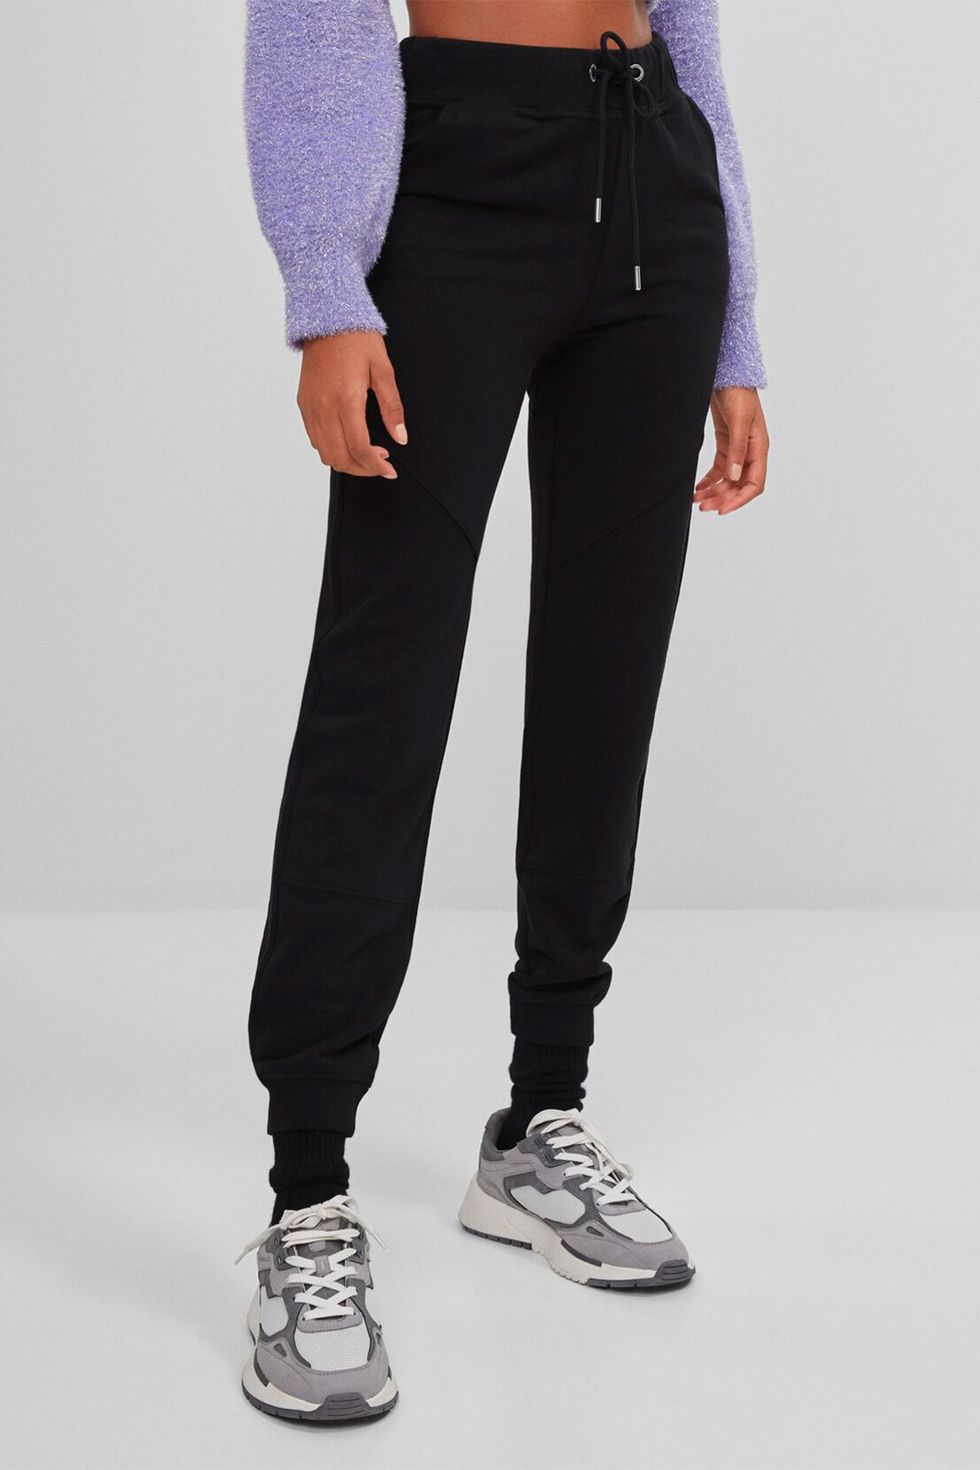 Este pantalón jogger Bershka top con una blazer oversize